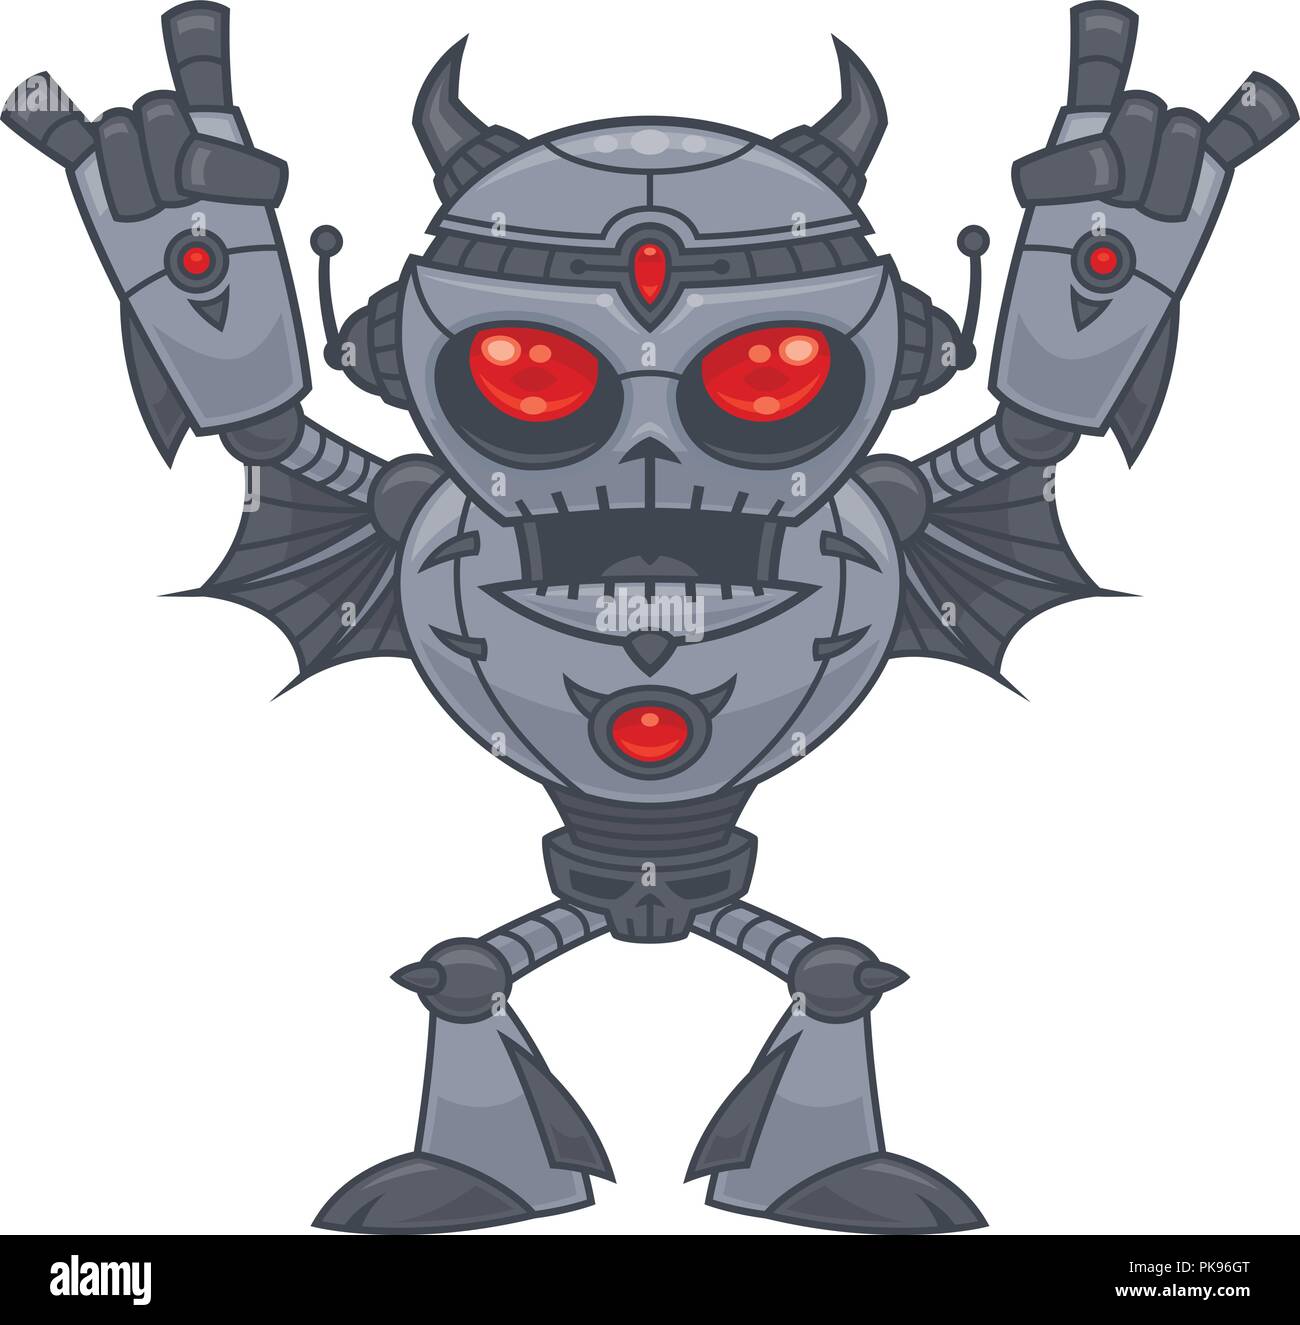 Metalhead - Heavy Metal Robot. Vector cartoon illustration of a red eyed heavy metal loving robot with devil horn hand gestures. Stock Vector